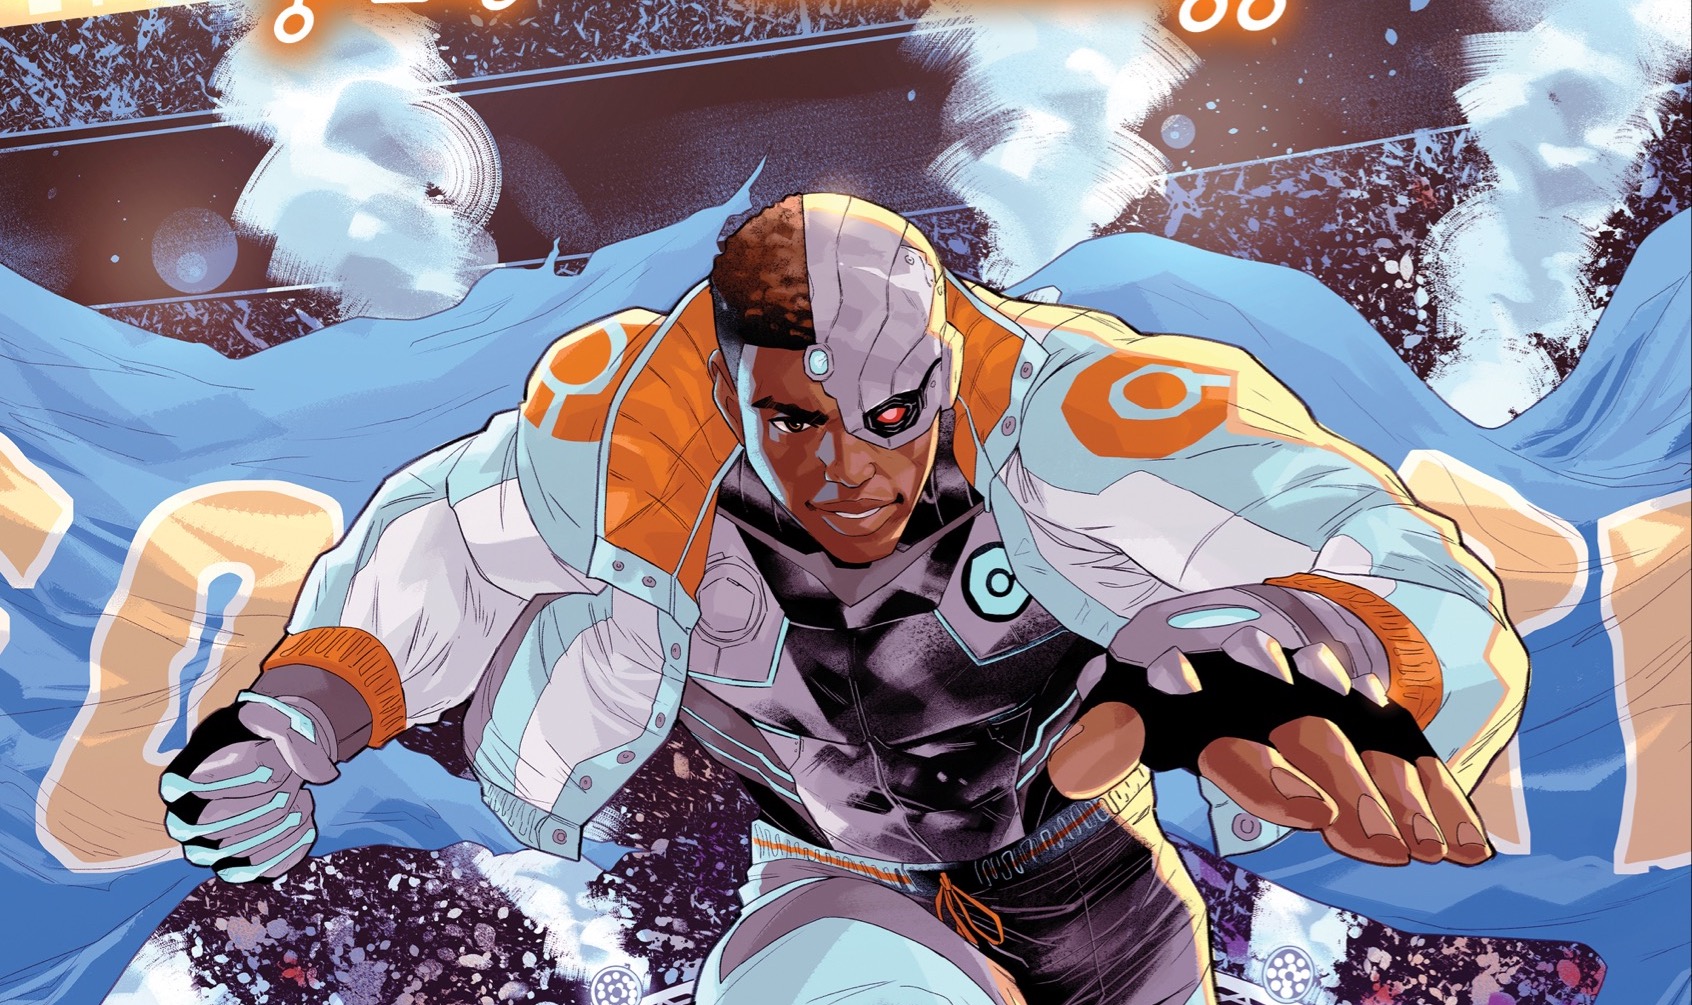 'Cyborg' writer Morgan Hampton talks growth and evolution amid Dawn of DC relaunch